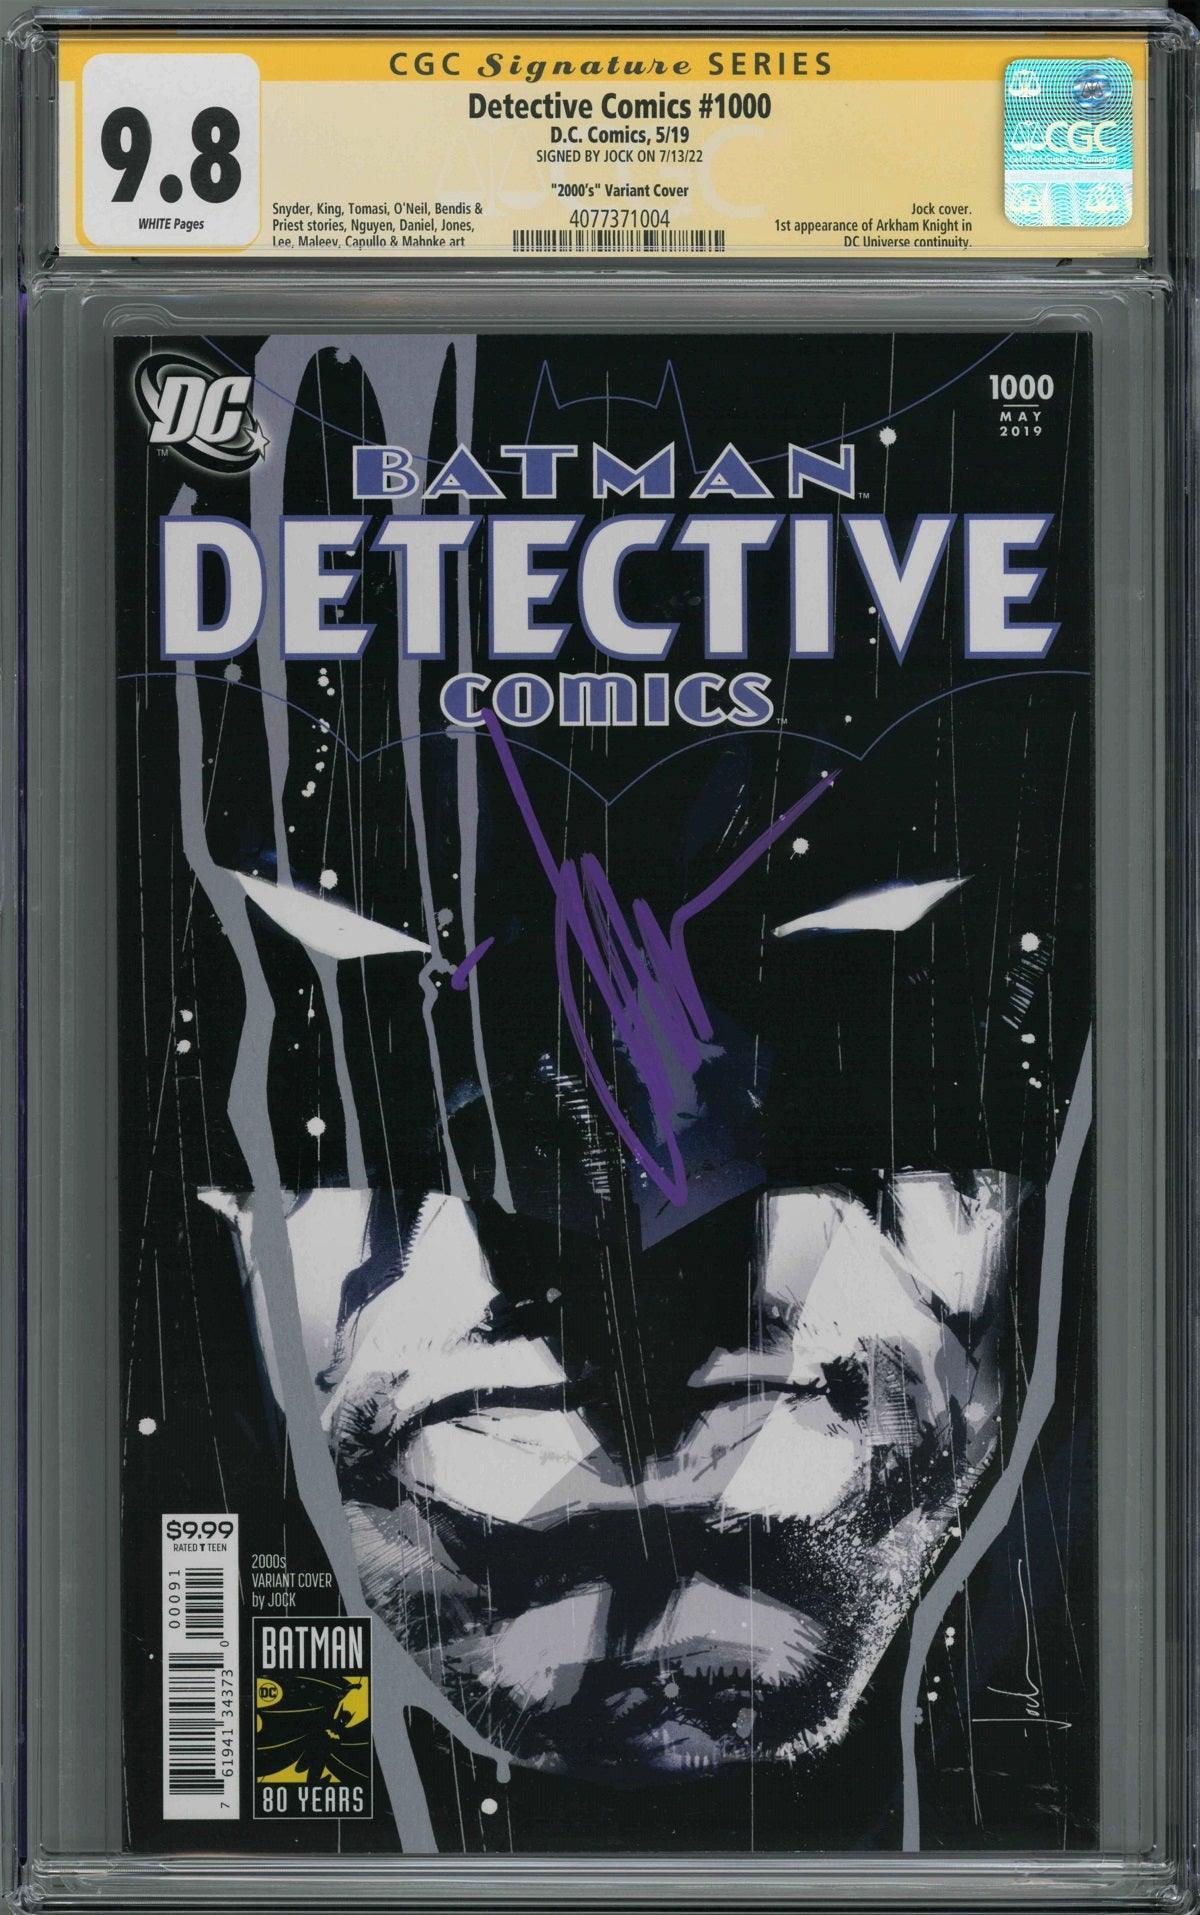 CGC DETECTIVE COMICS #1000 "2000's" VARIANT (9.8) SIGNATURE SERIES - SIGNED BY JOCK - Kings Comics